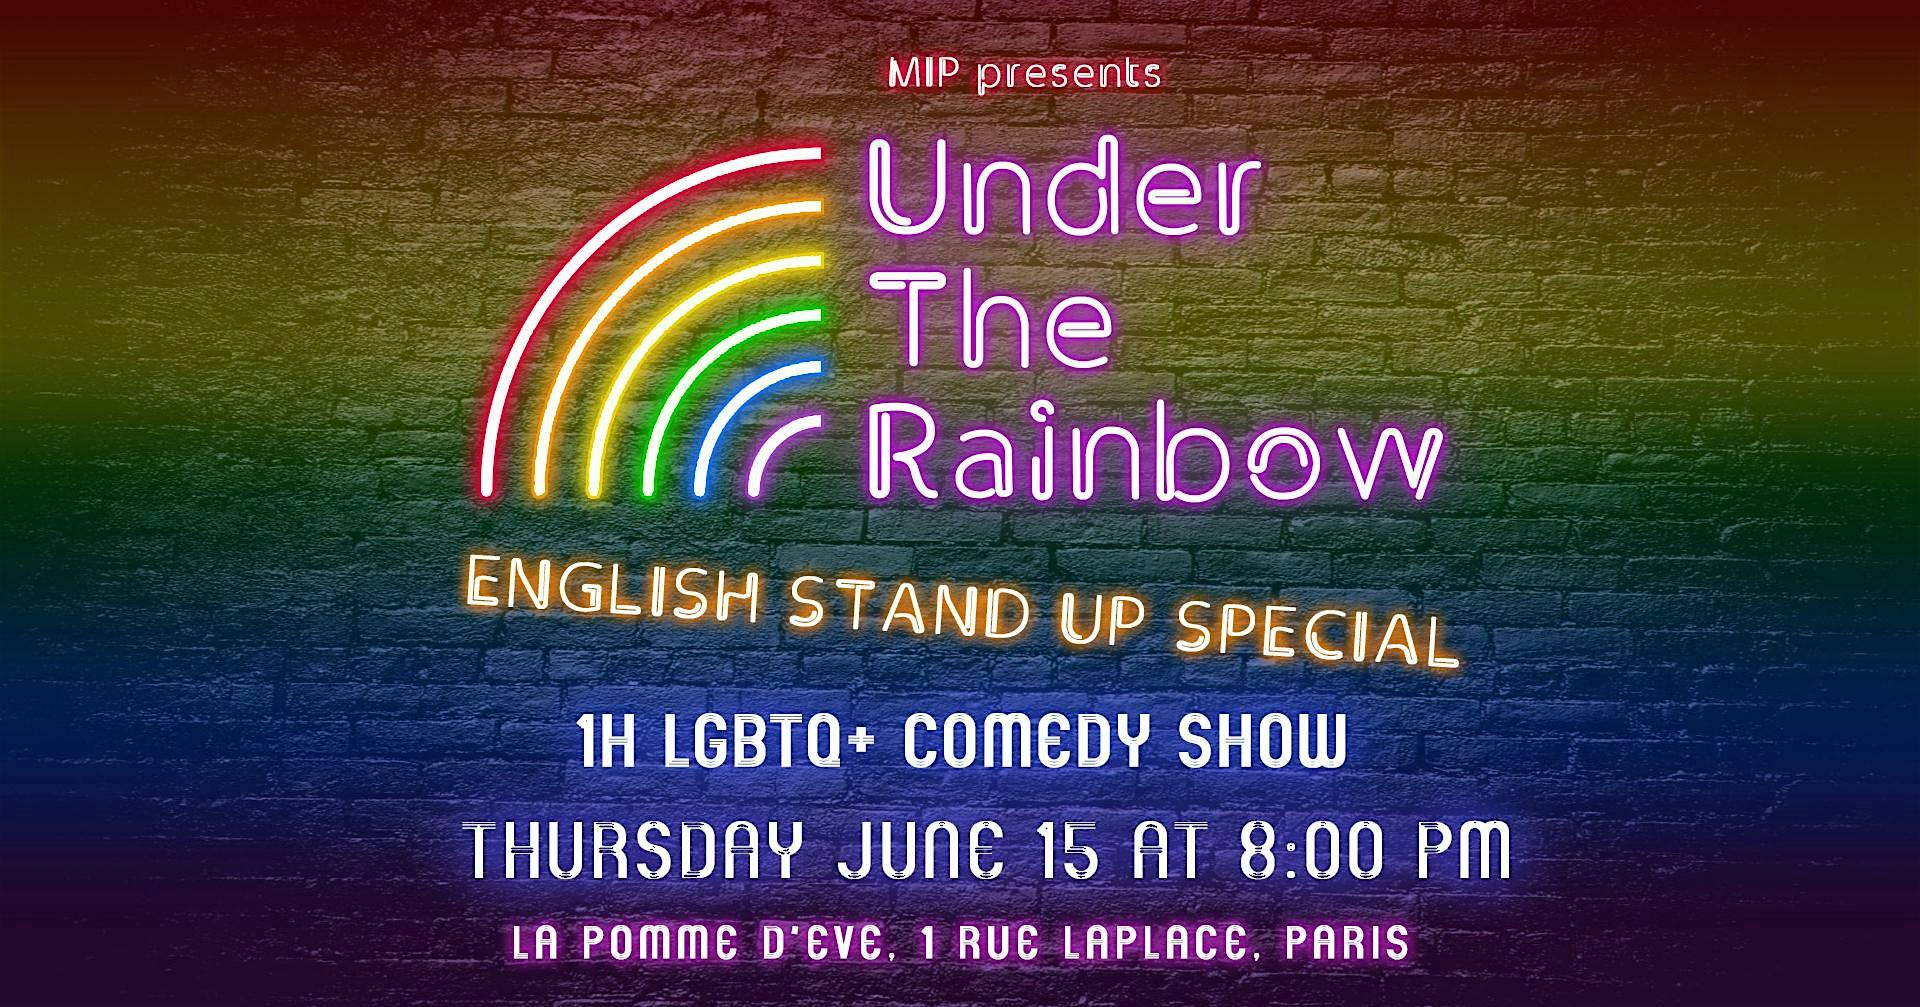 LGBT+ Comedy Show in Paris | Under the Rainbow logo